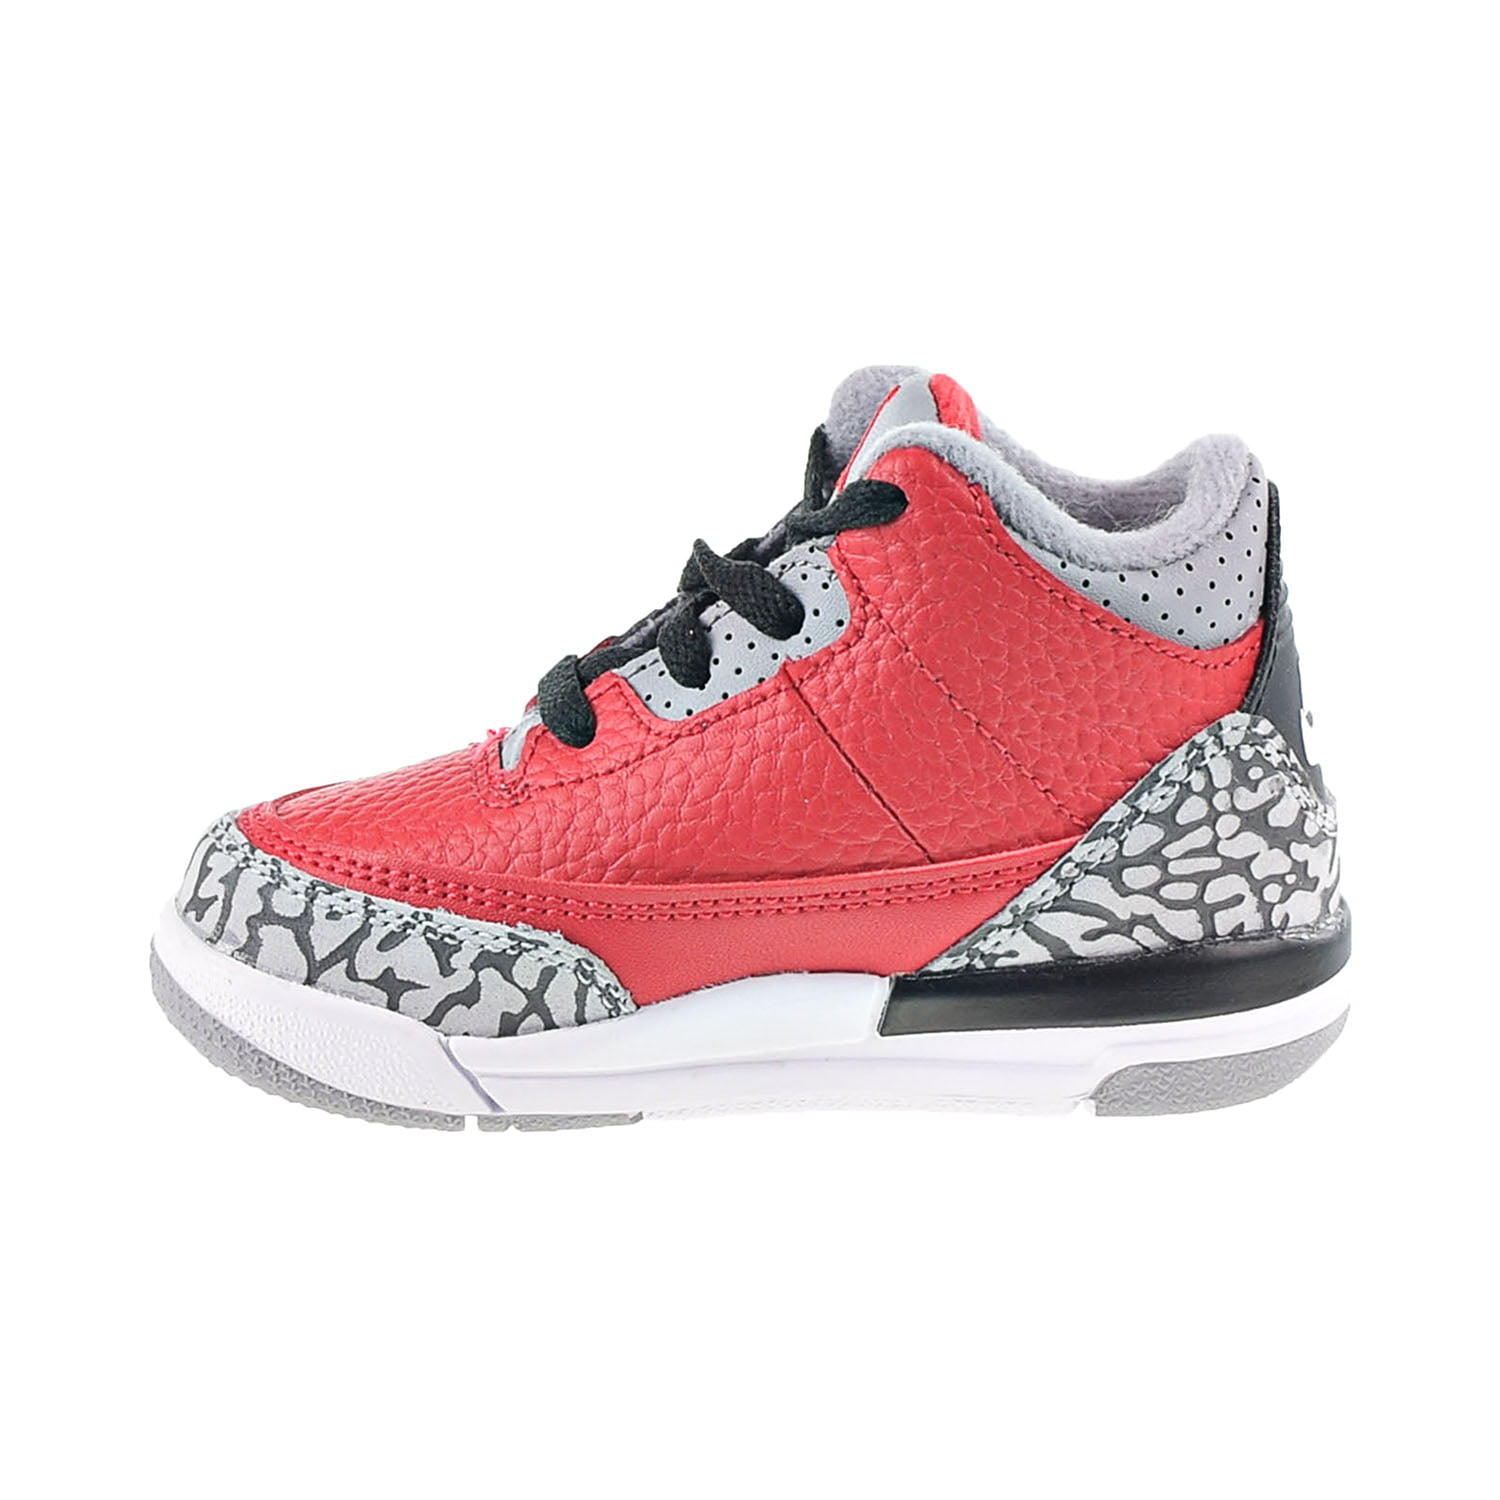 Jordan 3 Retro SE (TD) Toddler Shoes Fire Red-Cement Grey-Black 